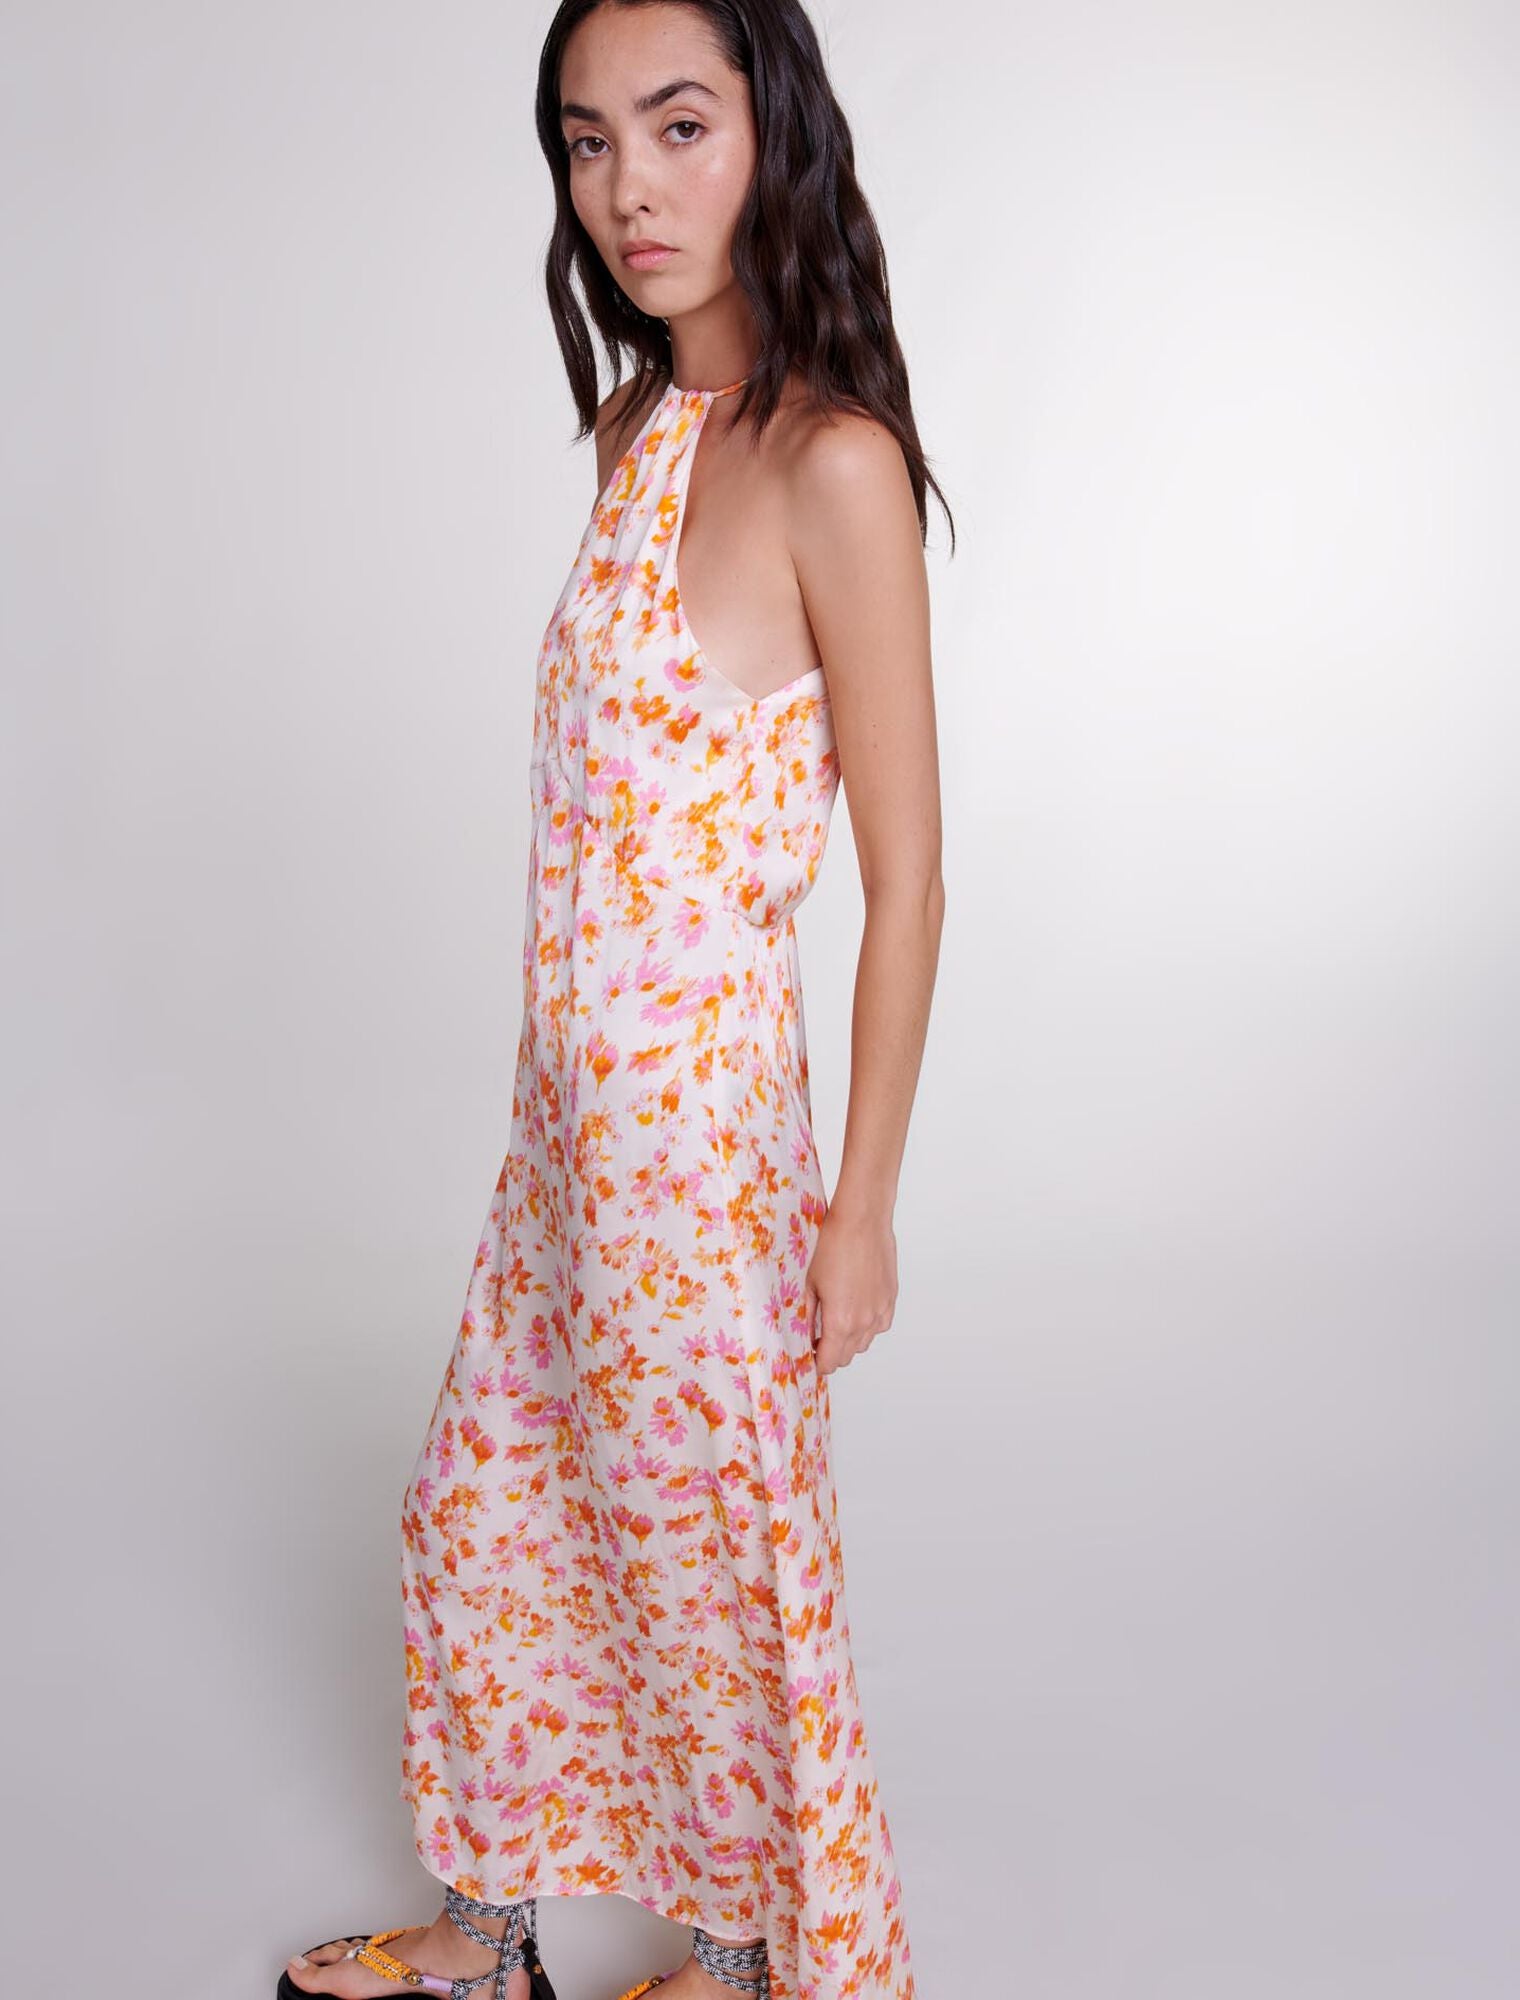 Sping Orange Flower Print-Floral satin-effect maxi dress